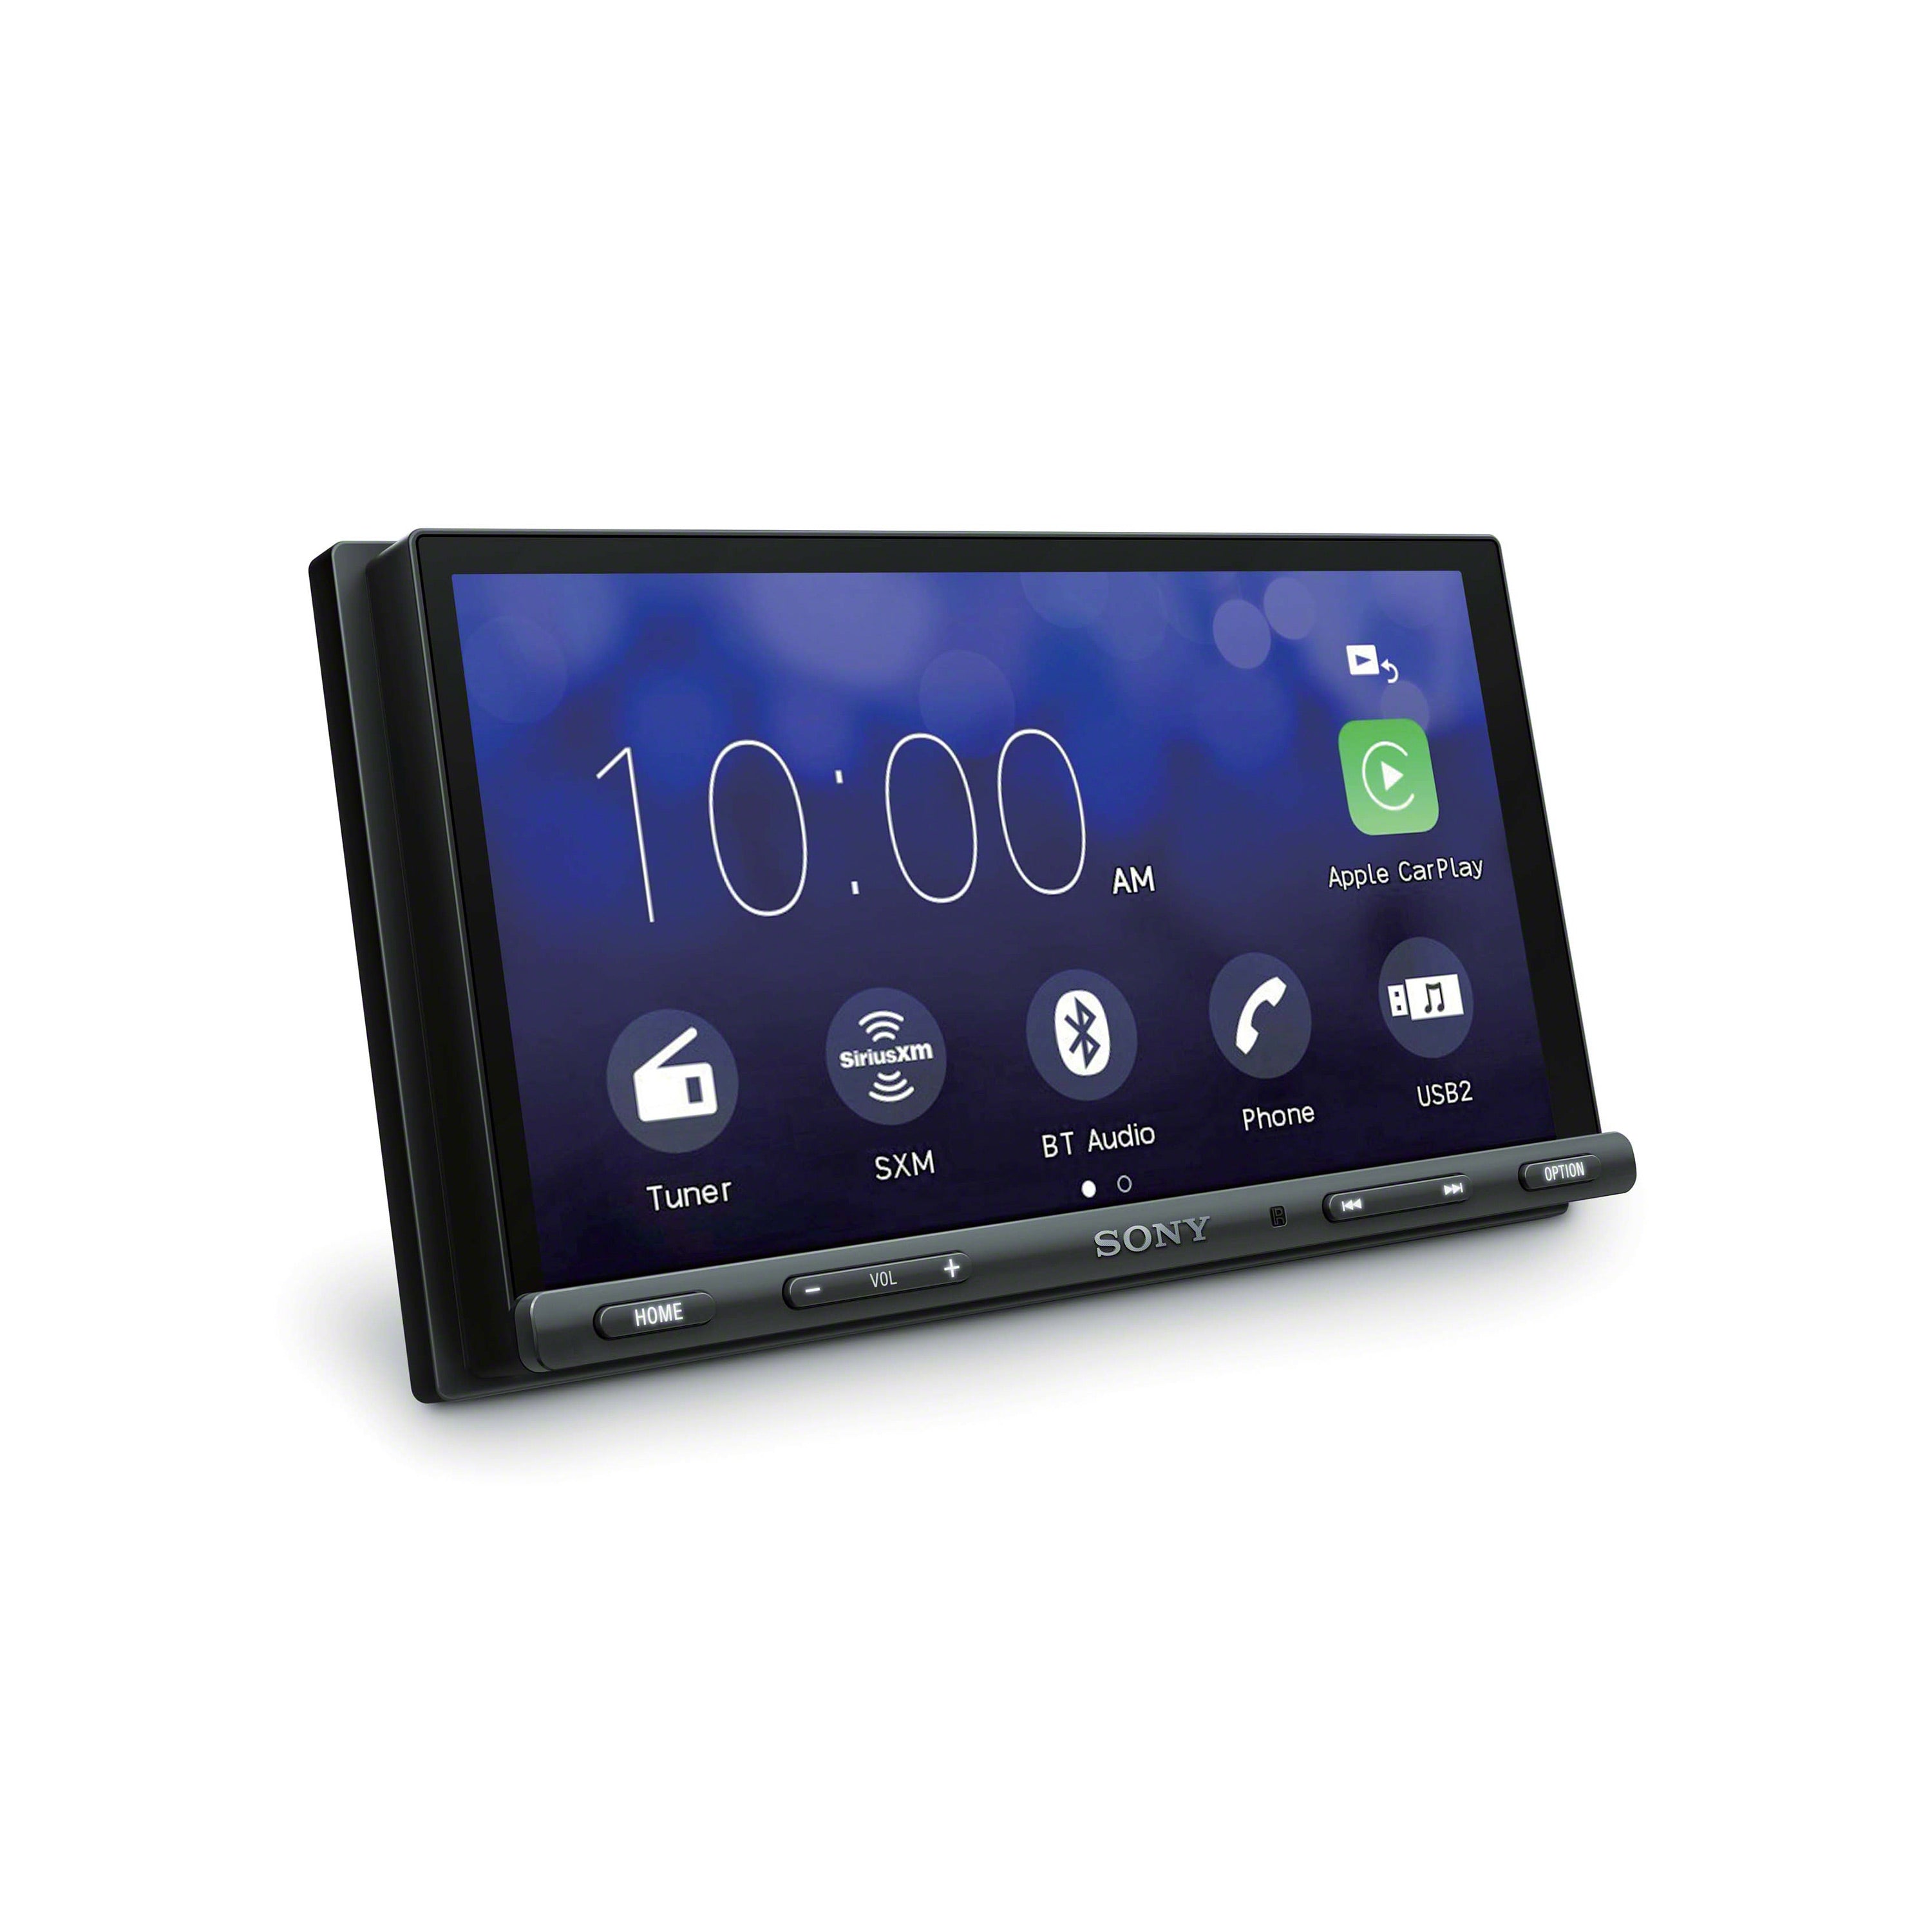 XAV-AX5000 | 17.6-cm (6.95-in) Media Receiver with Bluetooth®